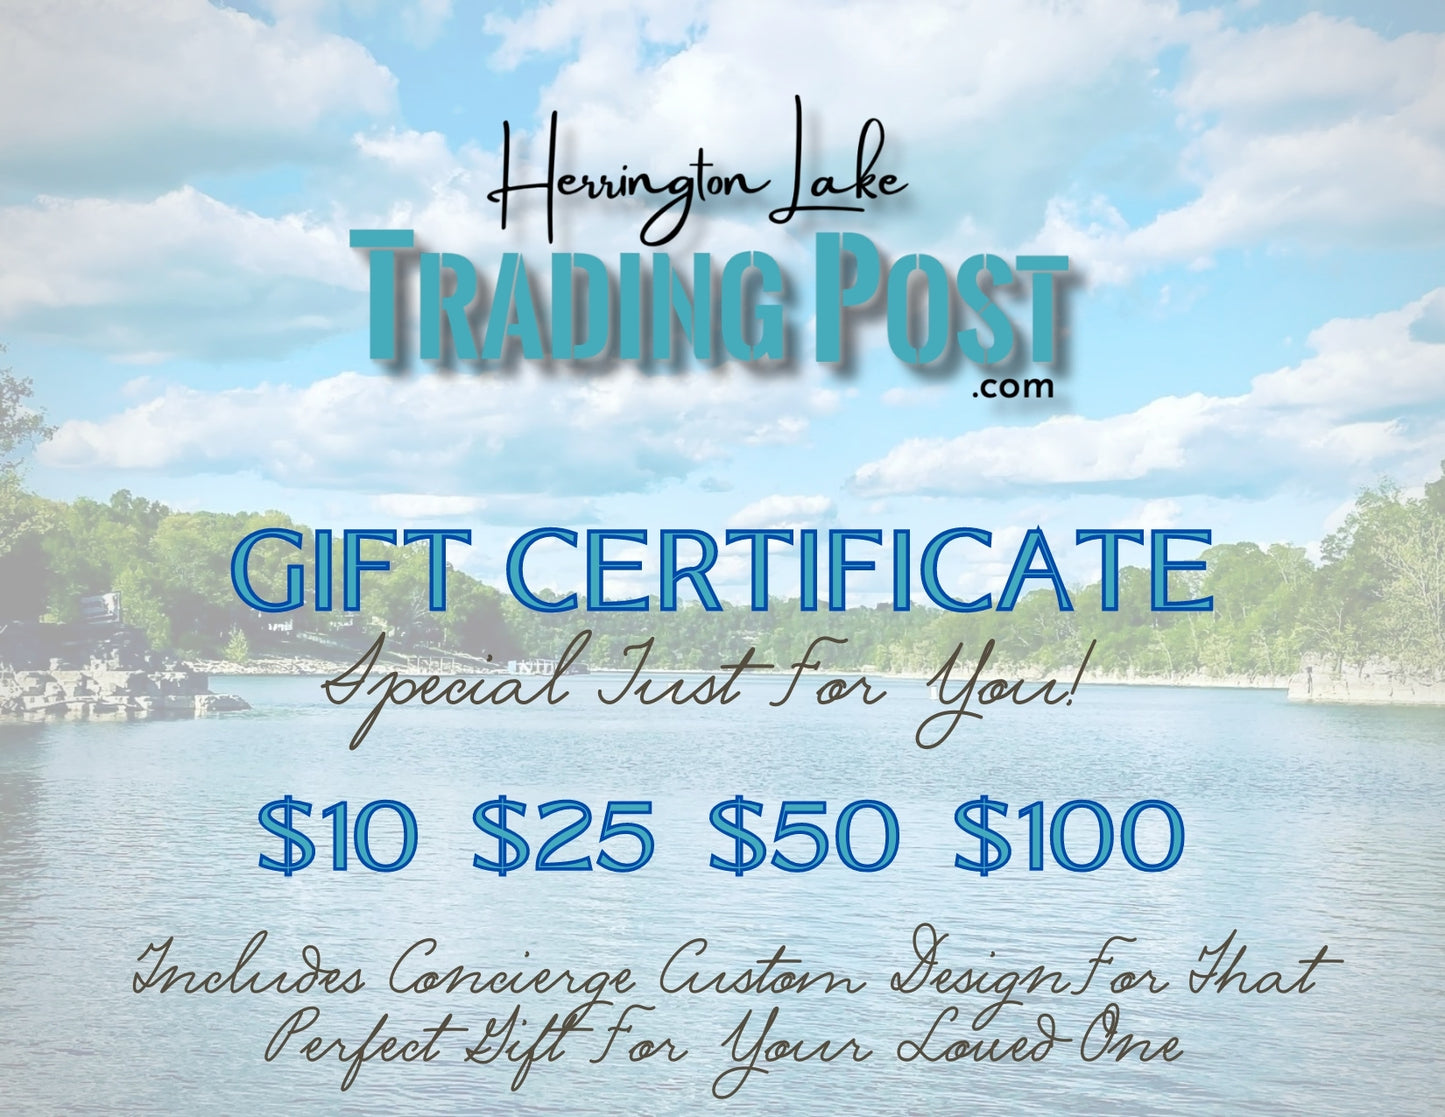 Herrington Lake Trading Post Gift Certificates